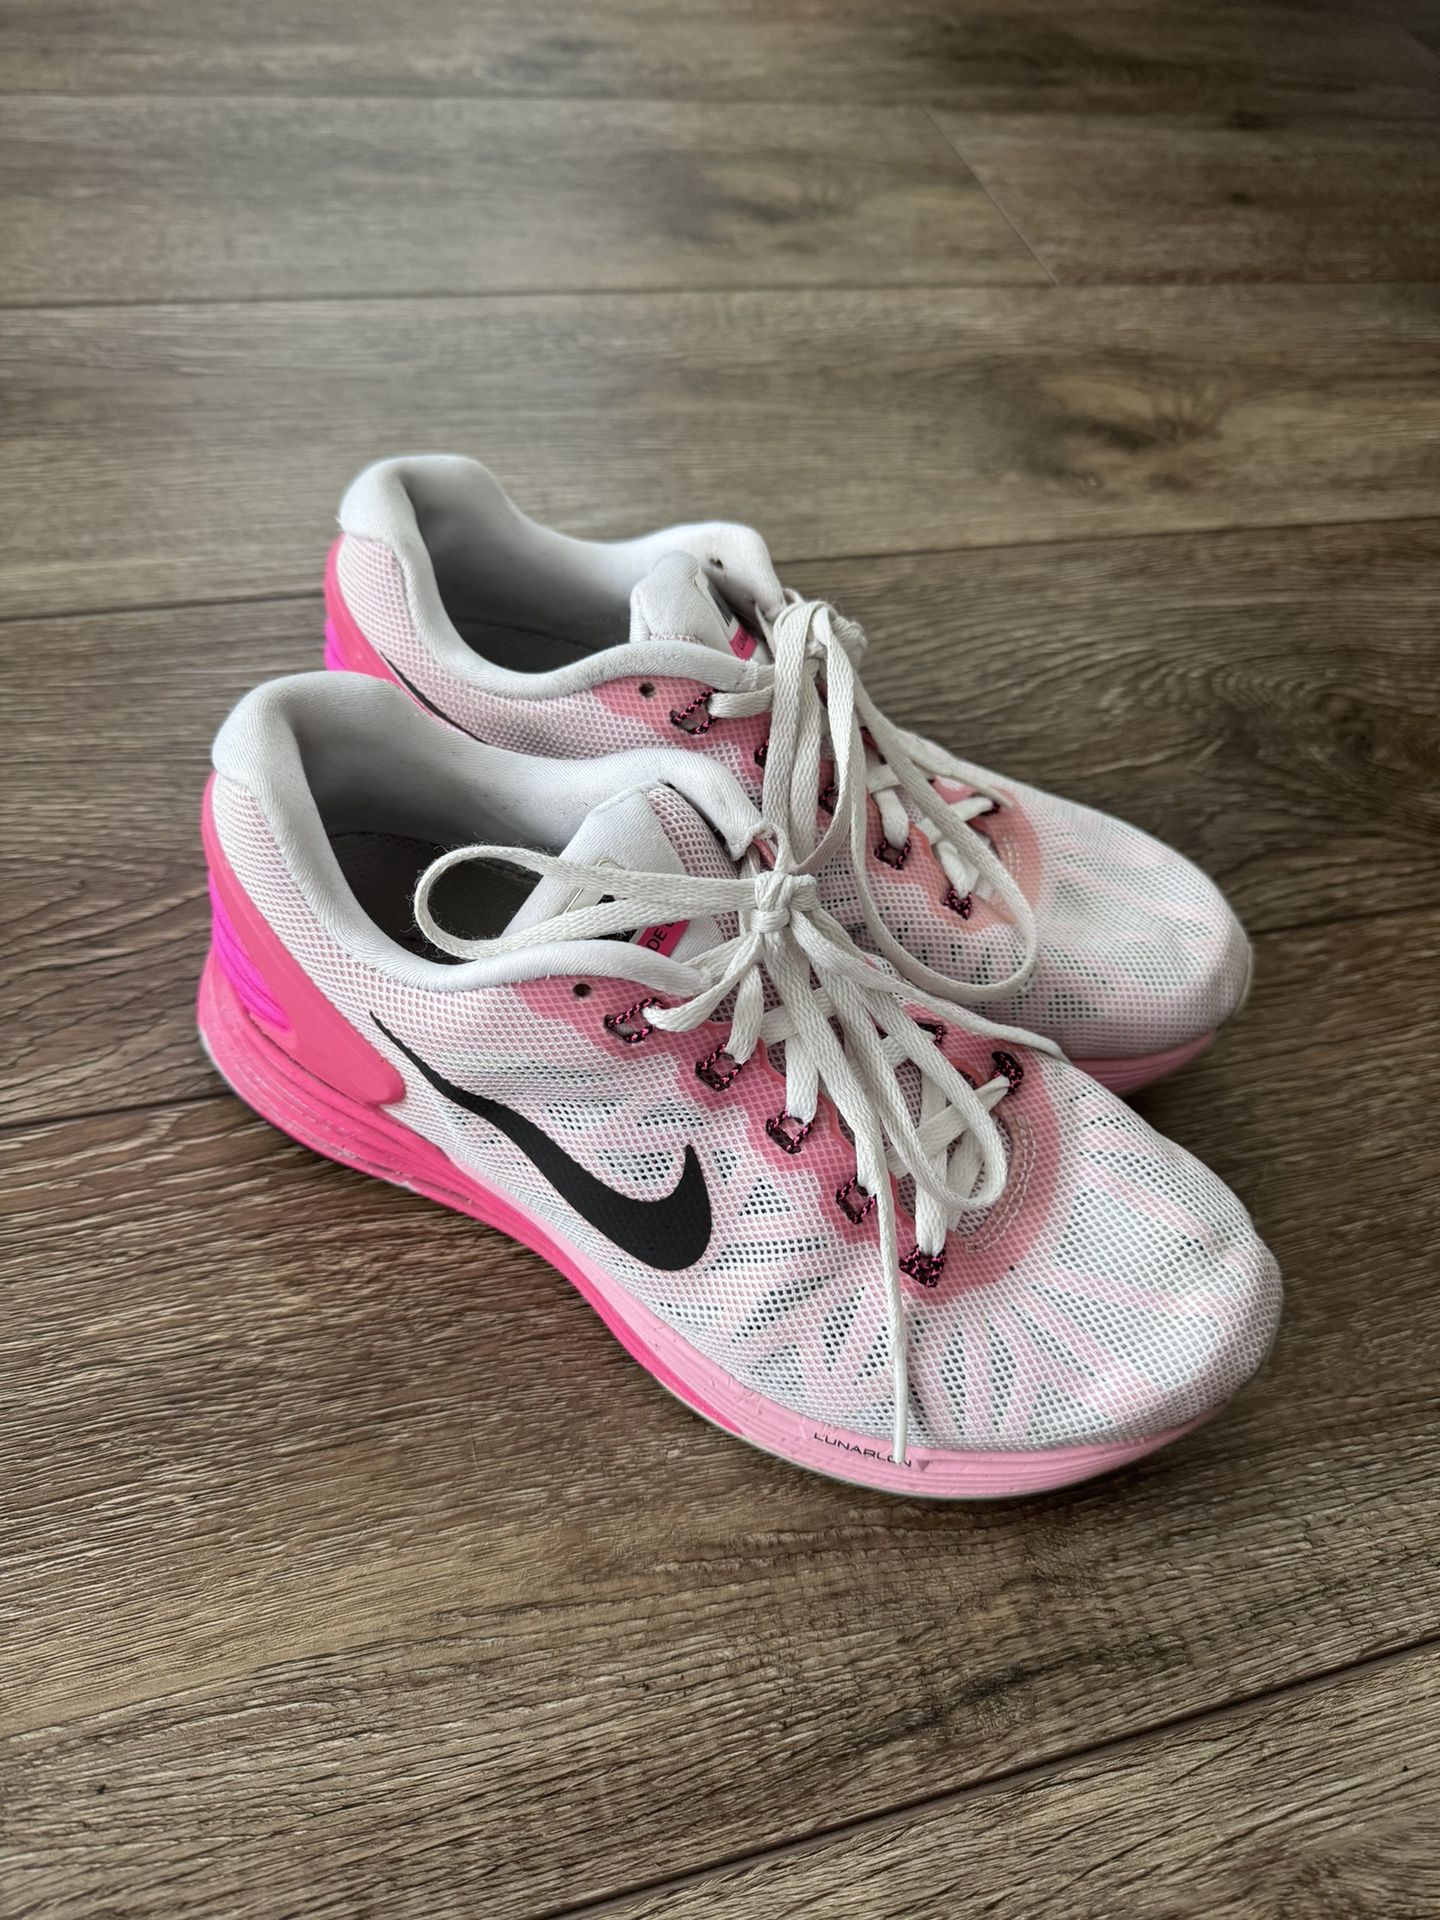 Nike Running Shoes For Women 